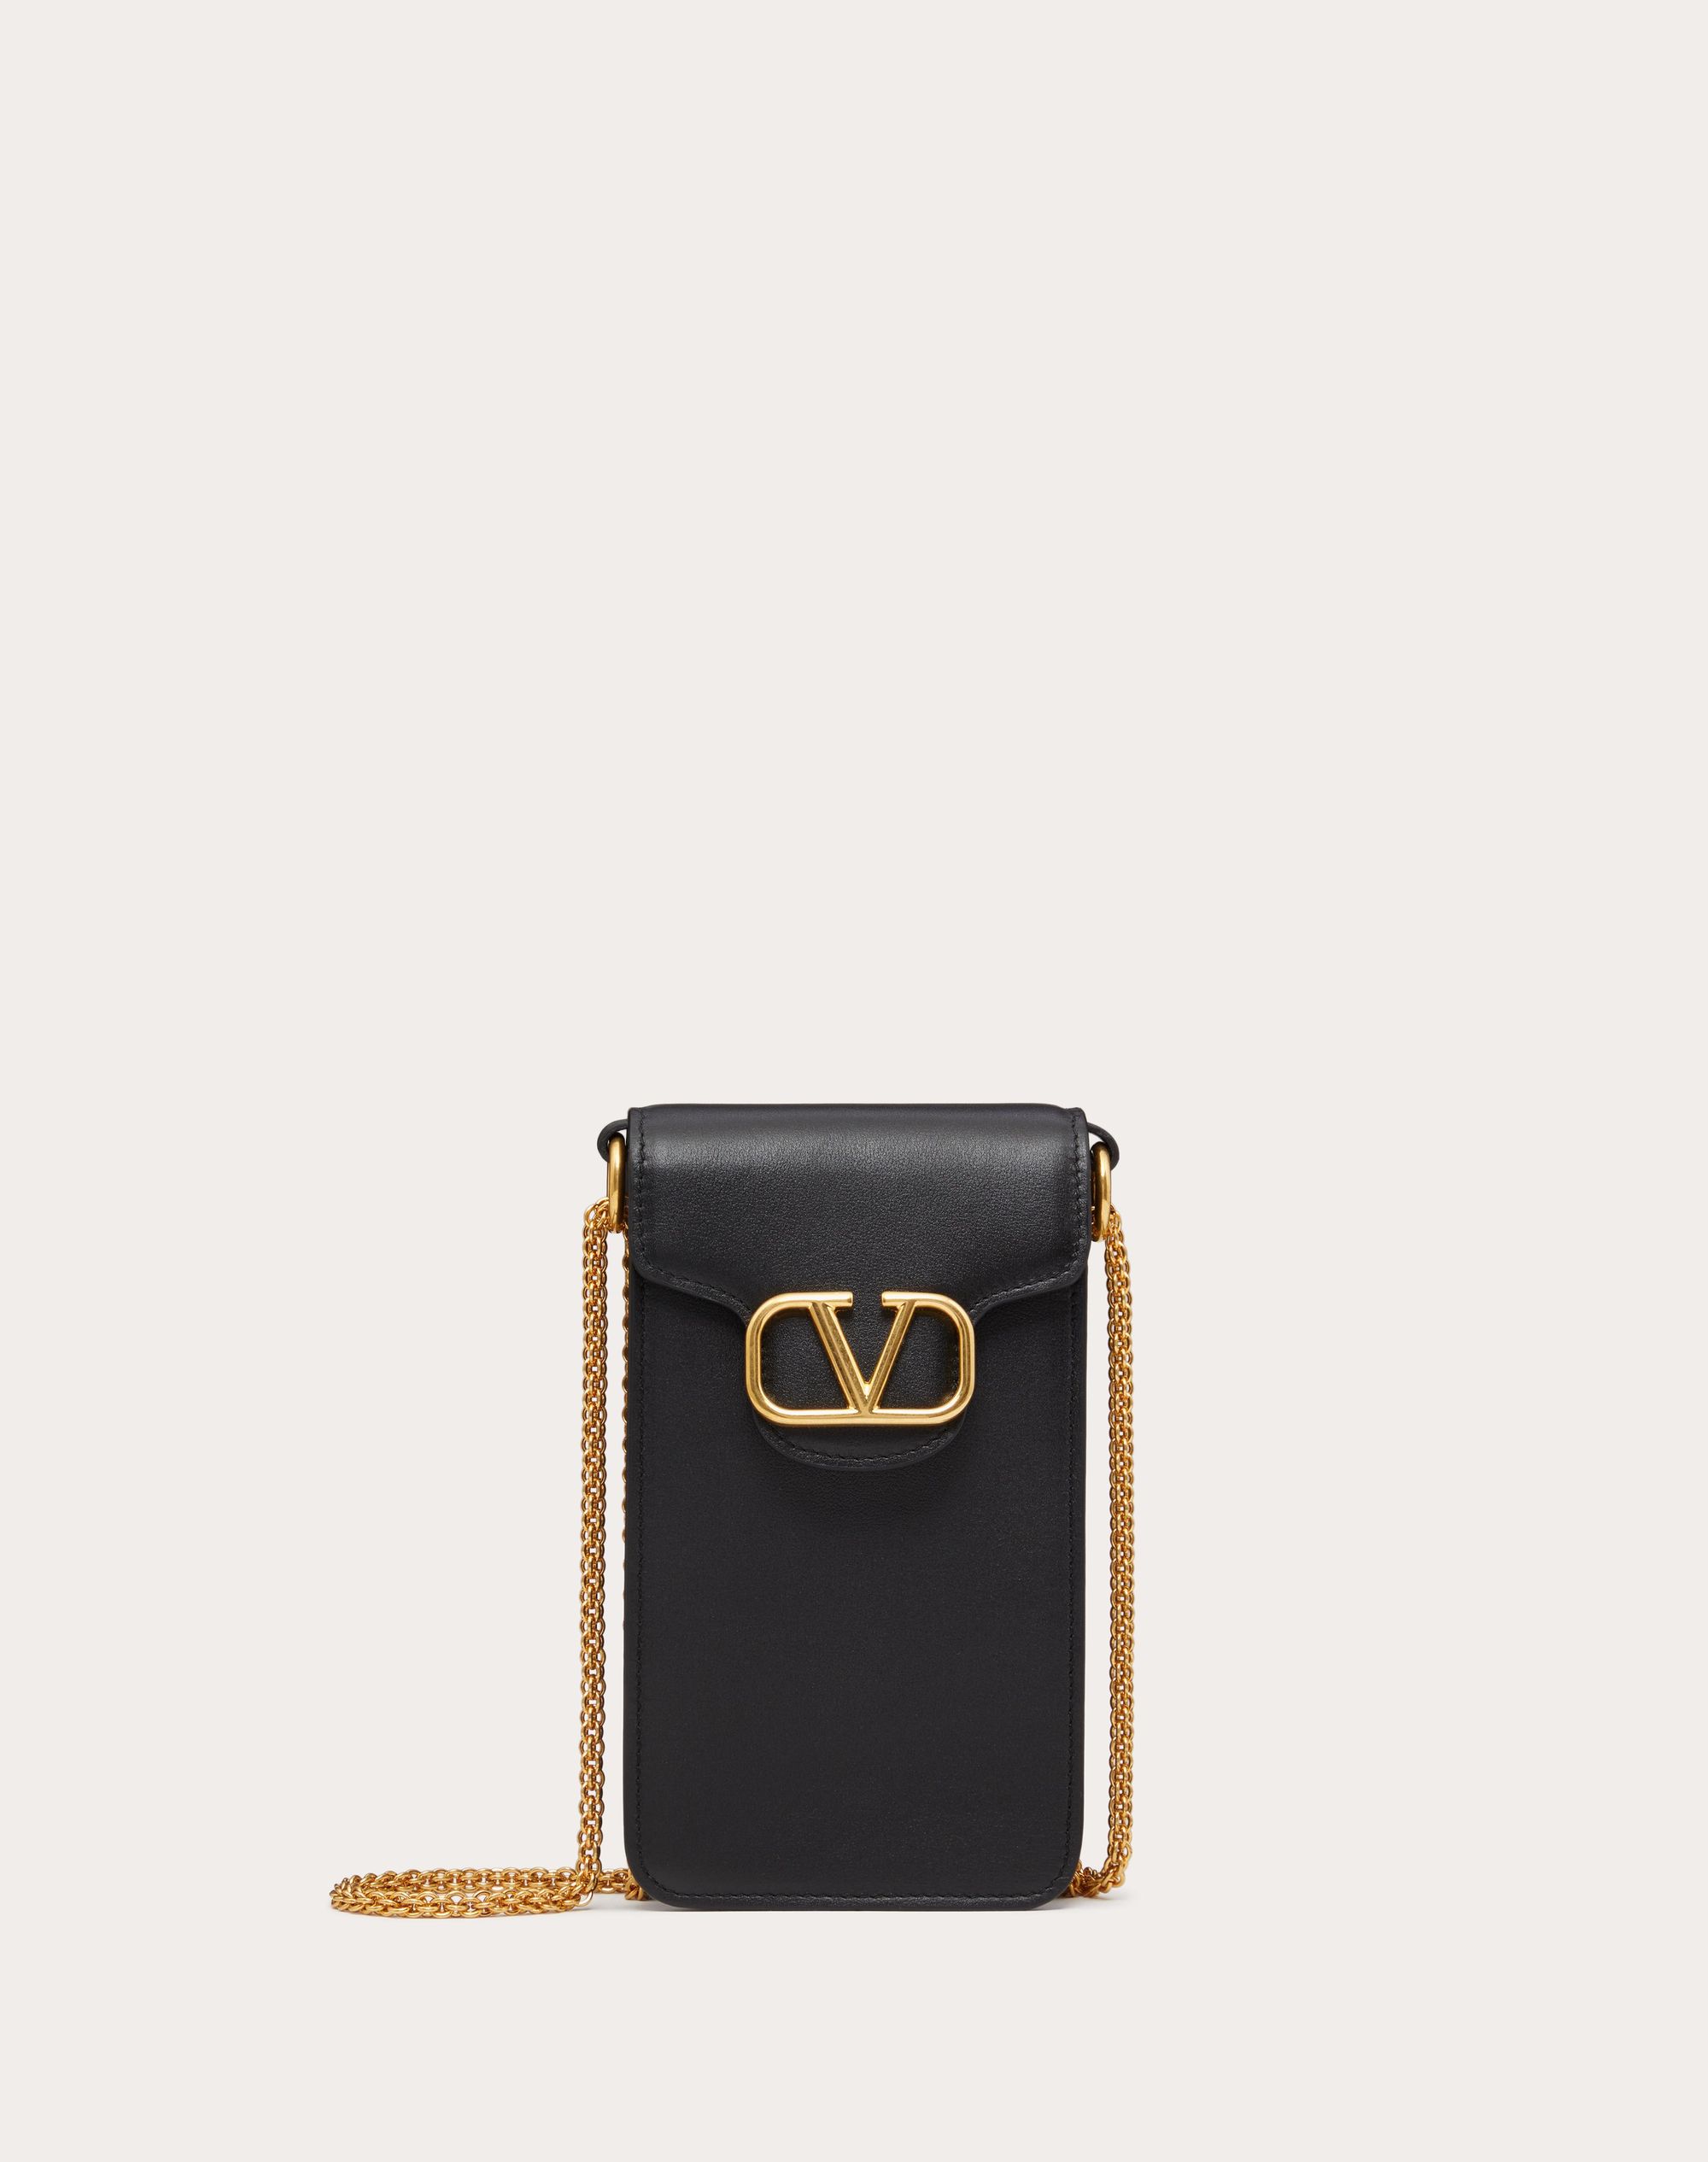 Image of a black Valentino Garavani phone holder with golden chain